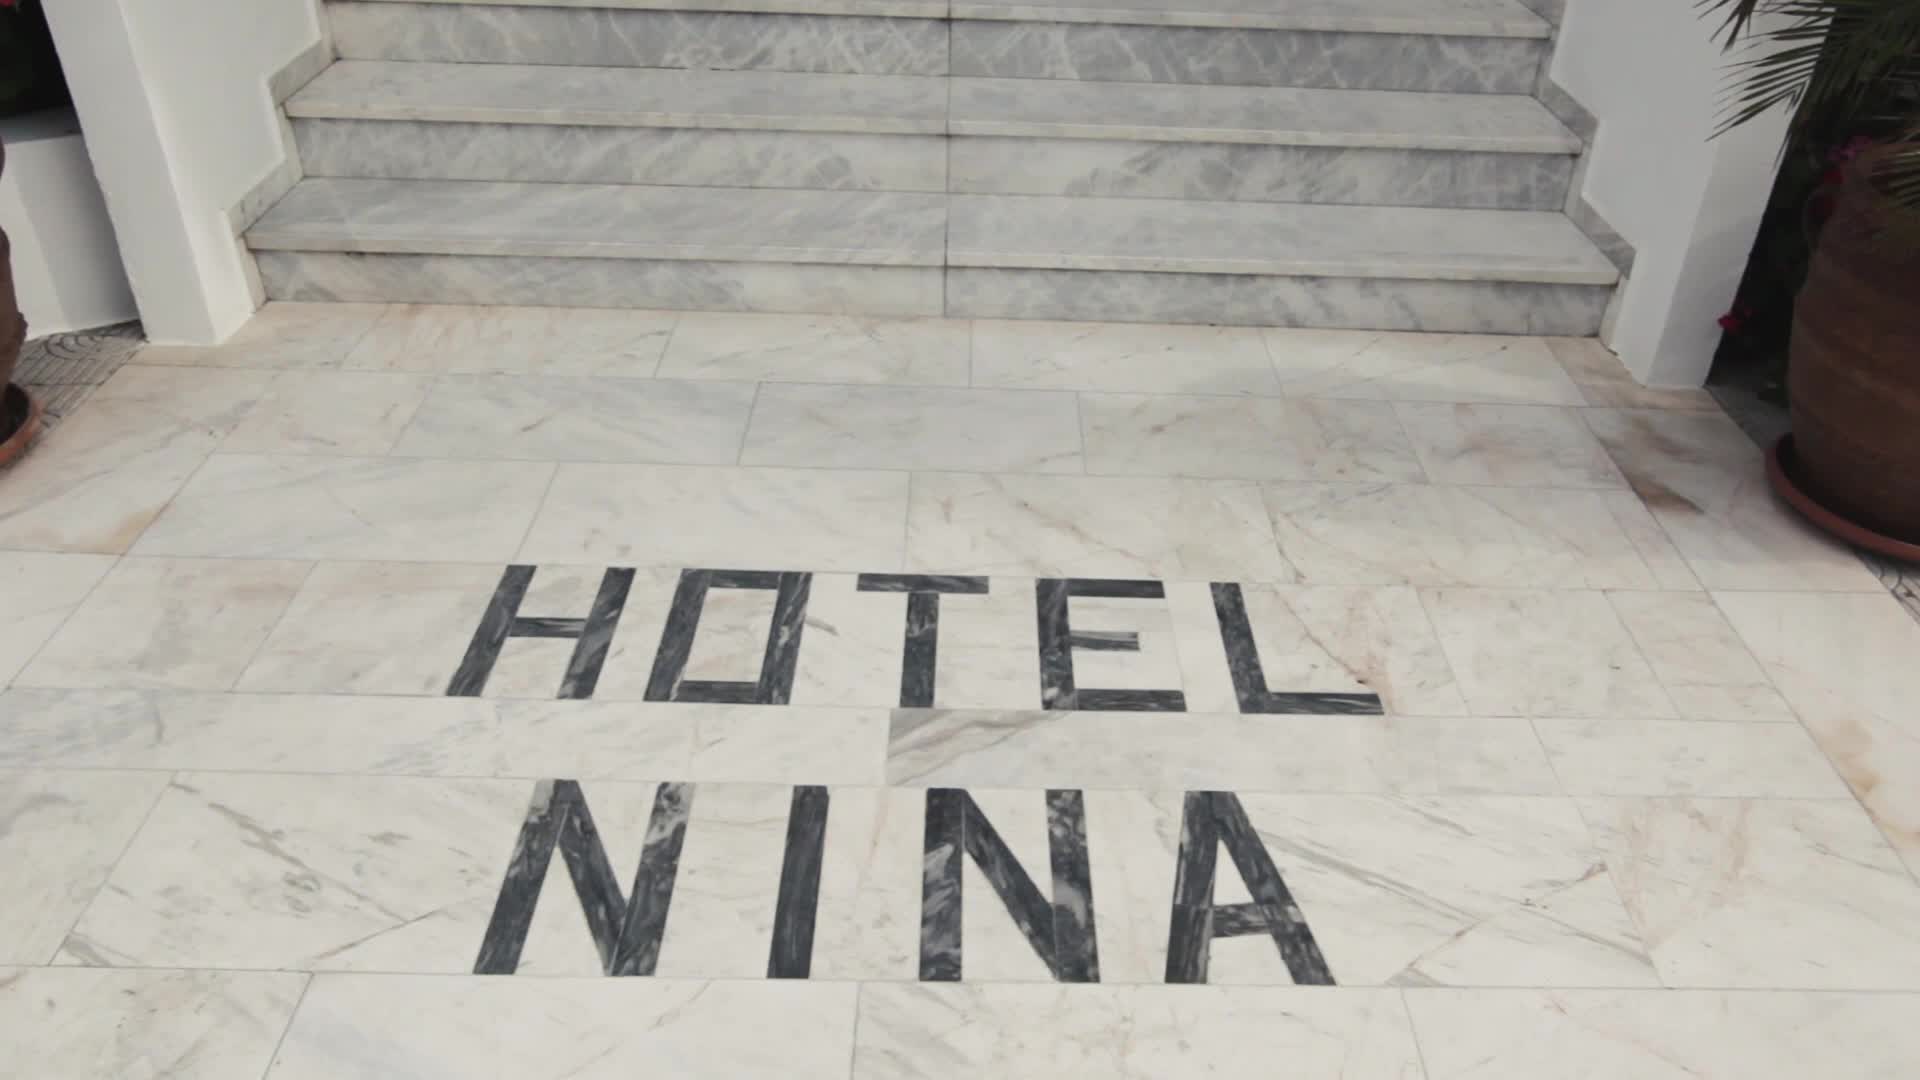 Nina Beach Hotel